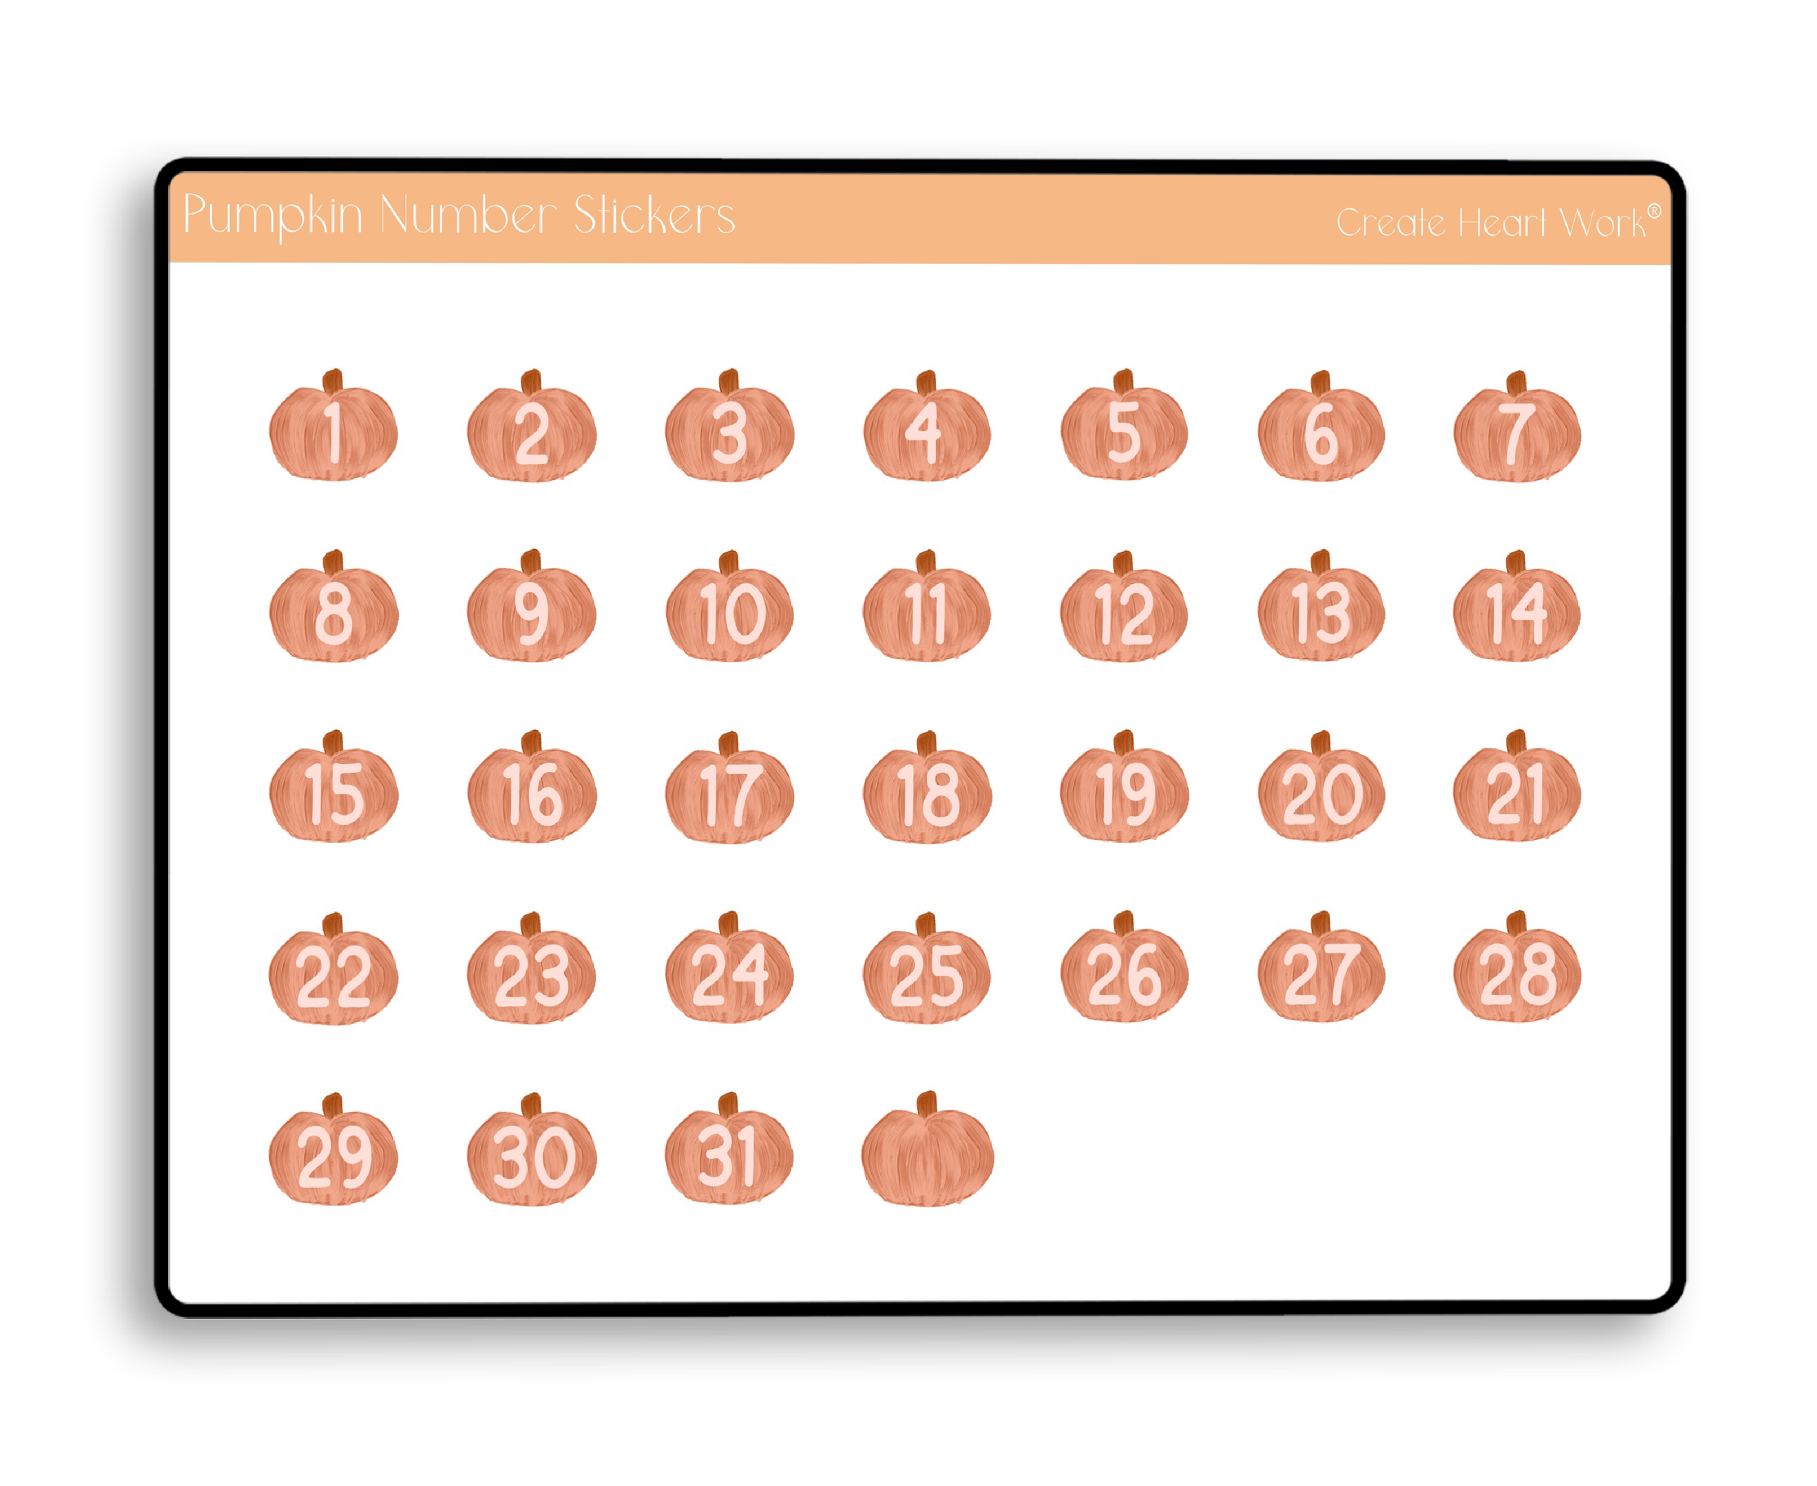 Pumpkin Number Stickers – Create Heart Work